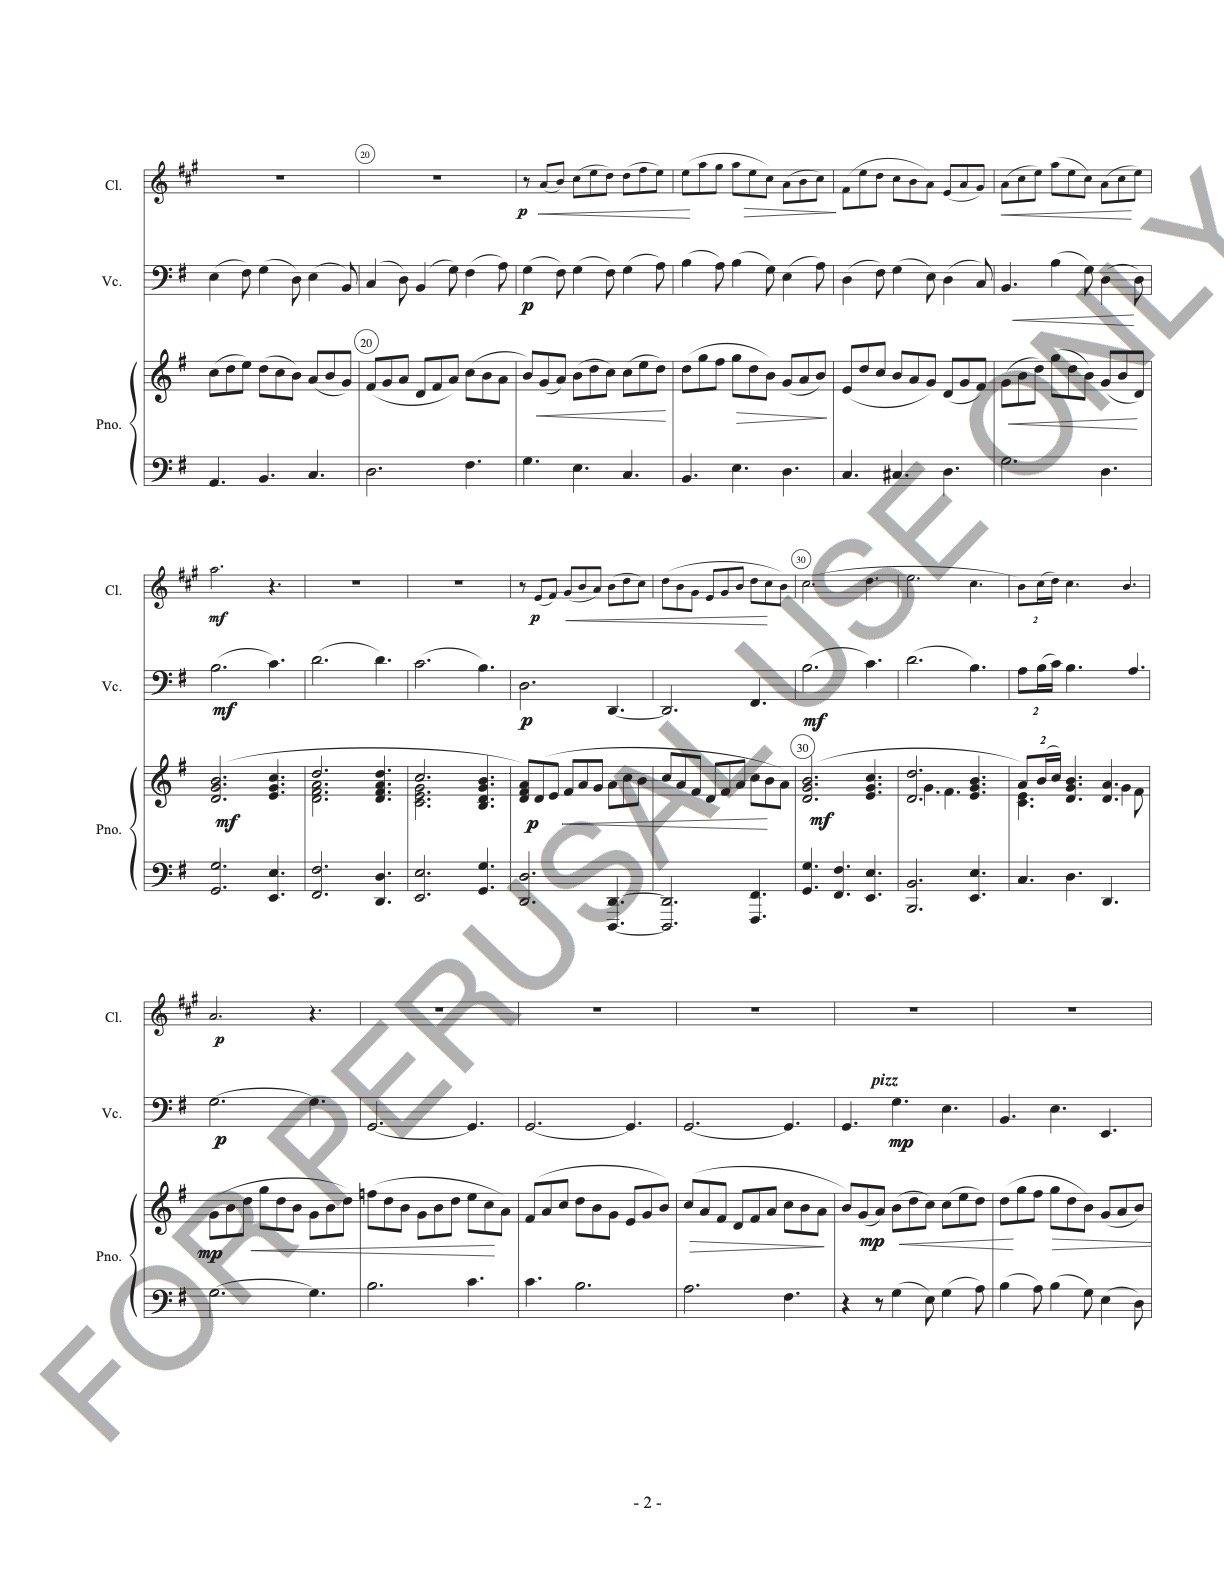 Clarinet, Violoncello and Piano sheet music: Jesu, Joy of Man's Desiring - ChaipruckMekara